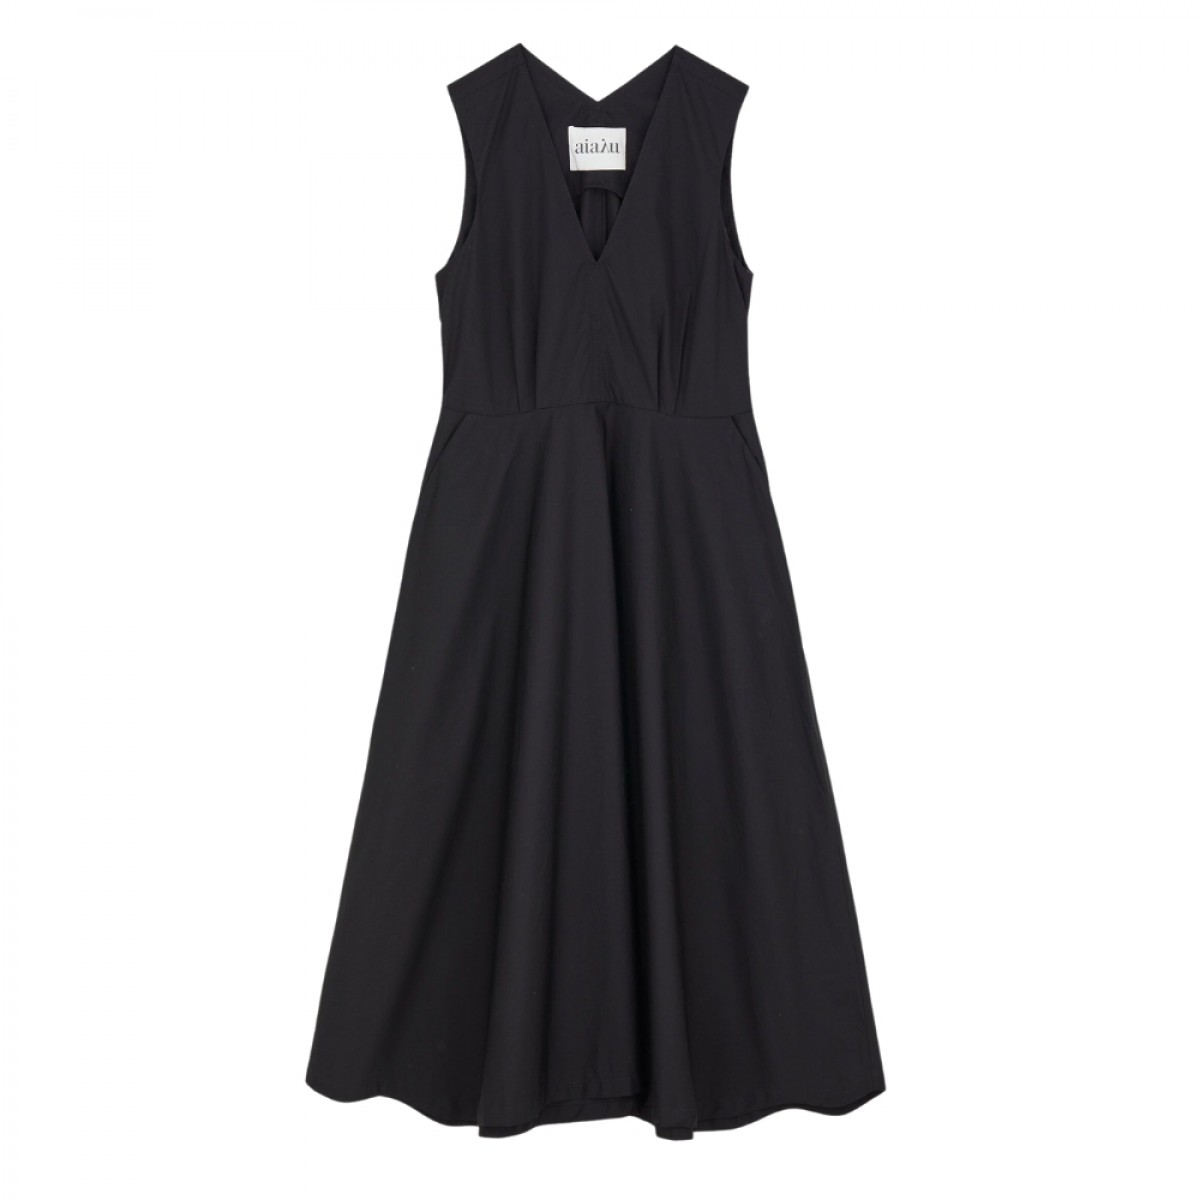 bea dress - black - front